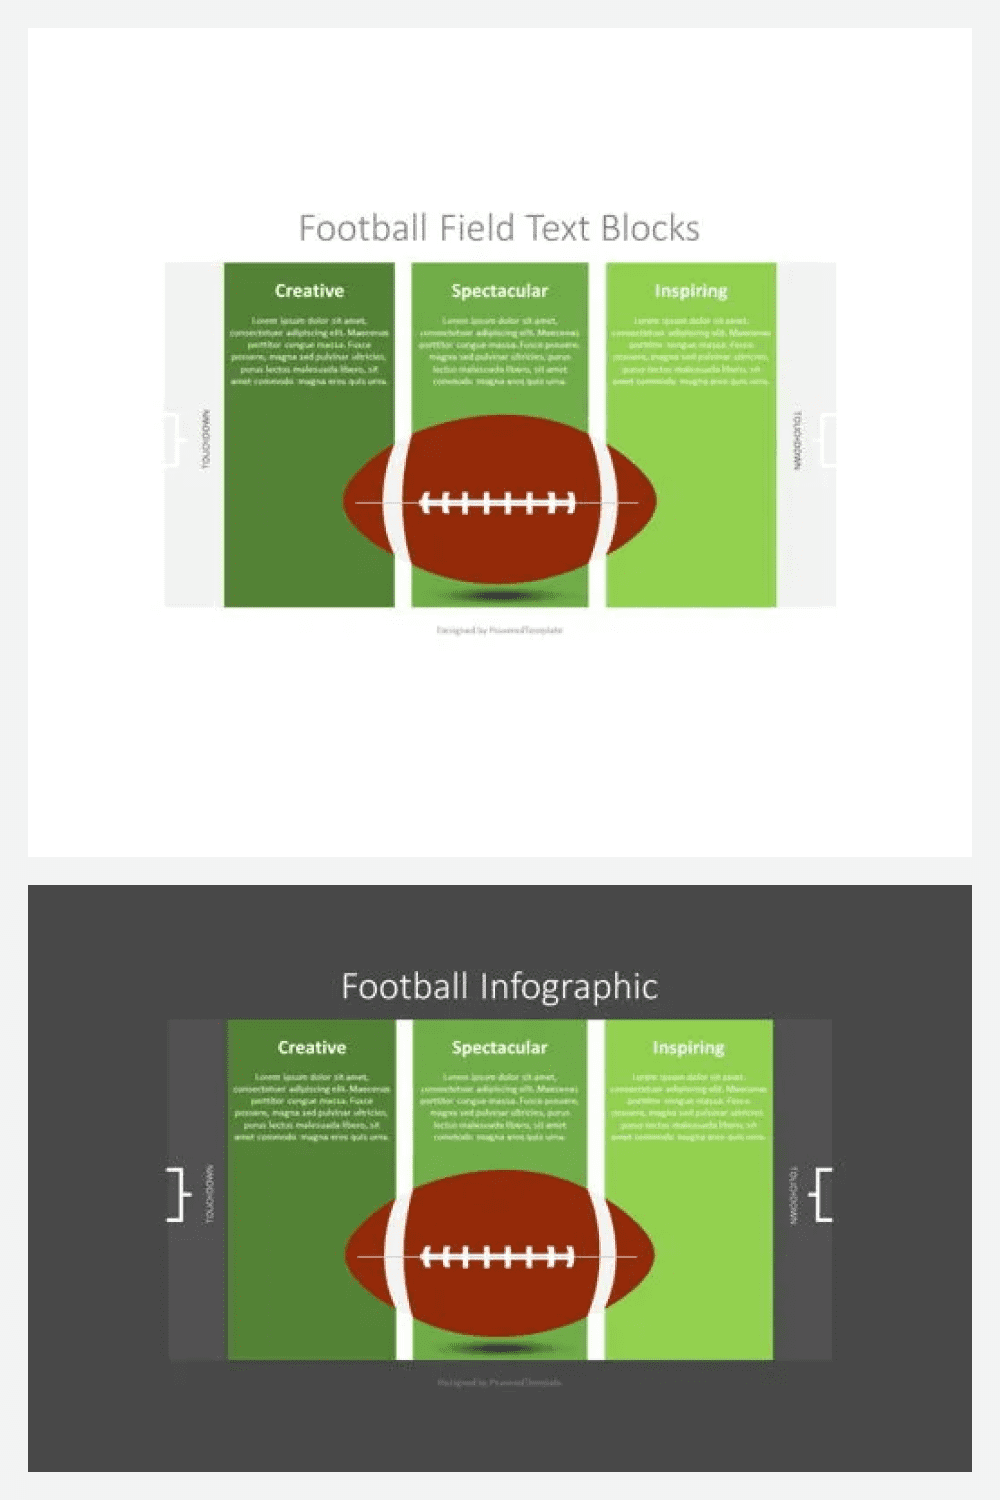 football powerpoint template